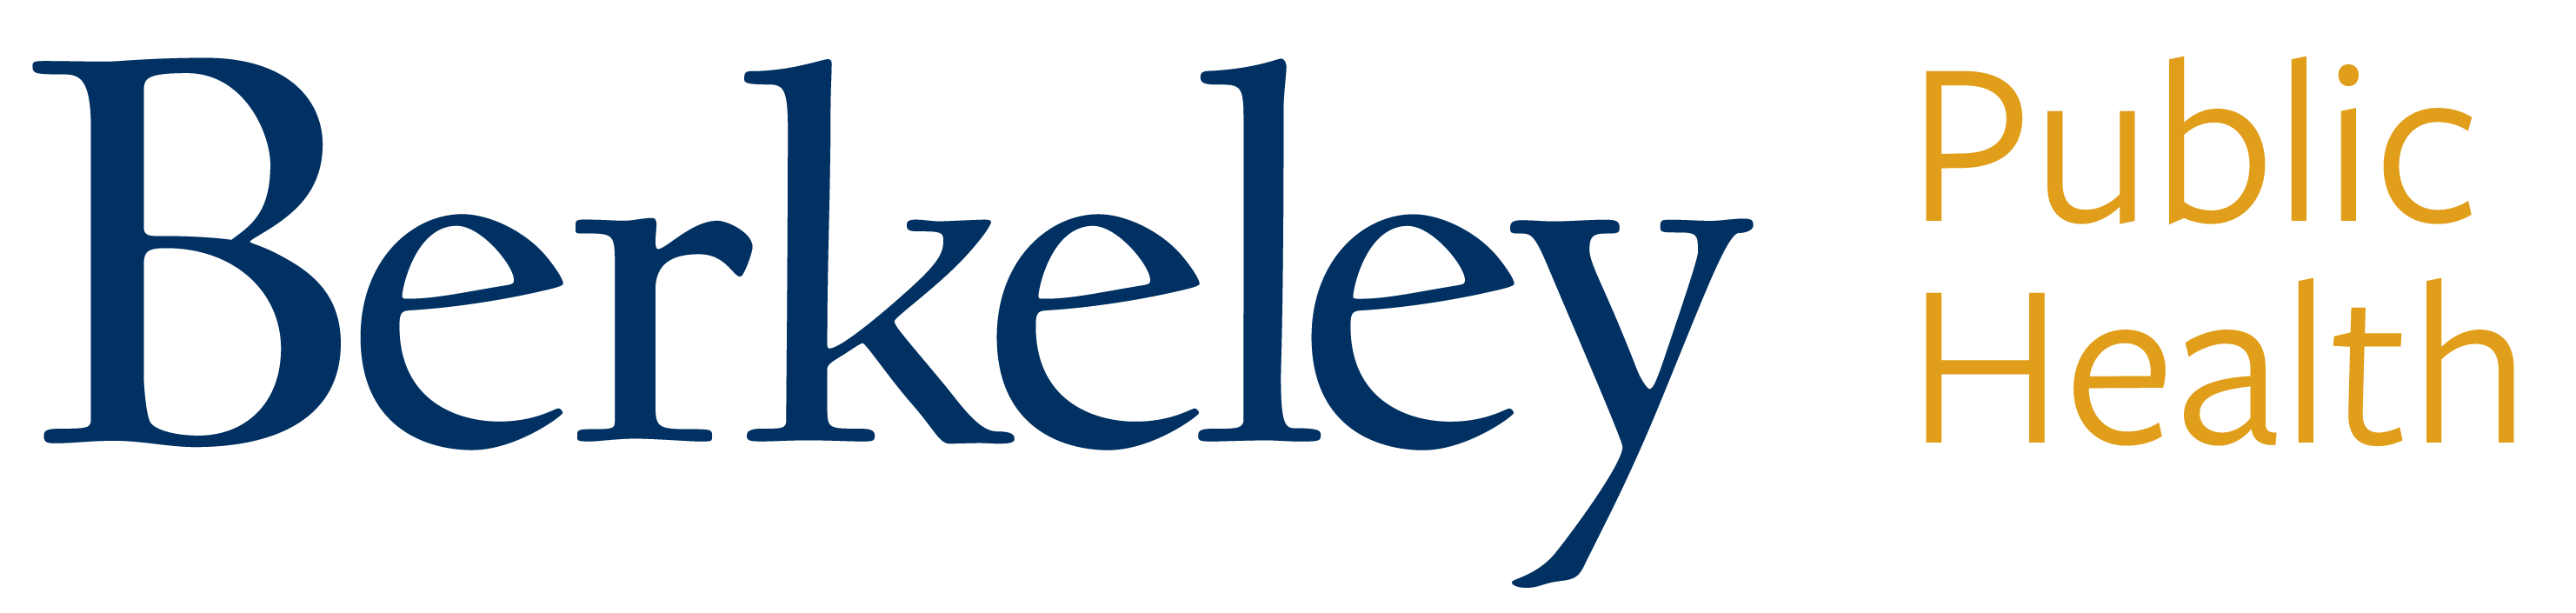 Berkeley School of Public Health logo